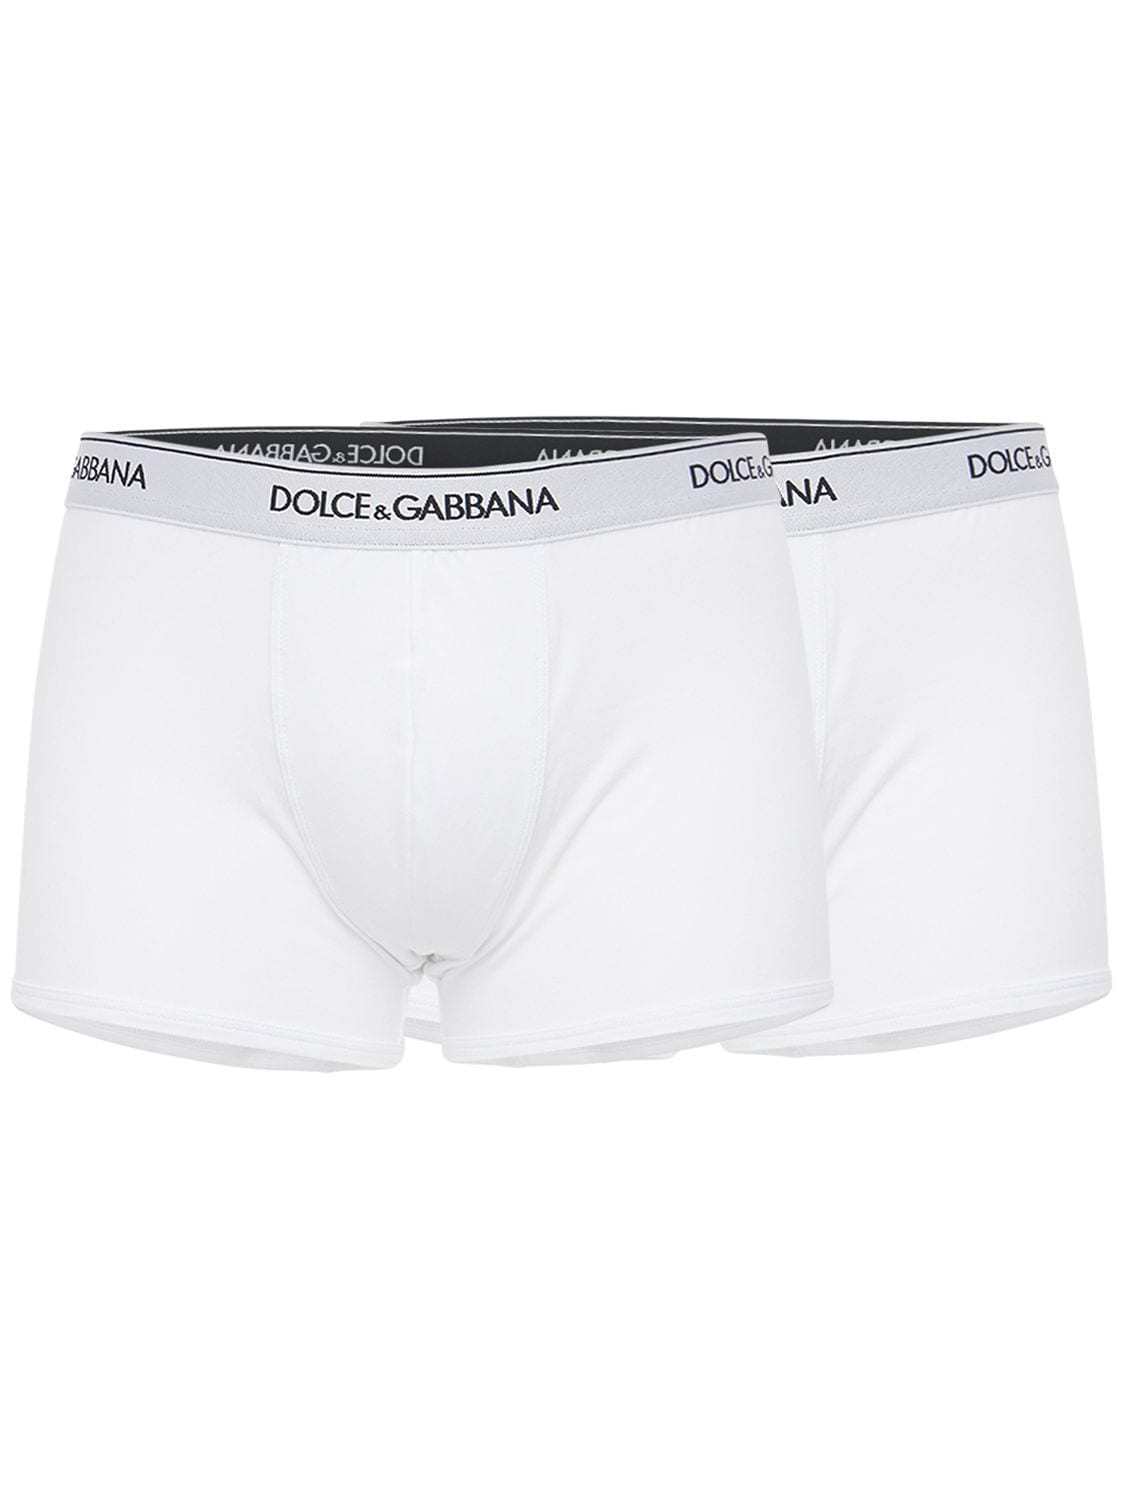 Dolce & Gabbana Men's Underwear Day By Day Bi-Pack Men's Boxer Trunks Black